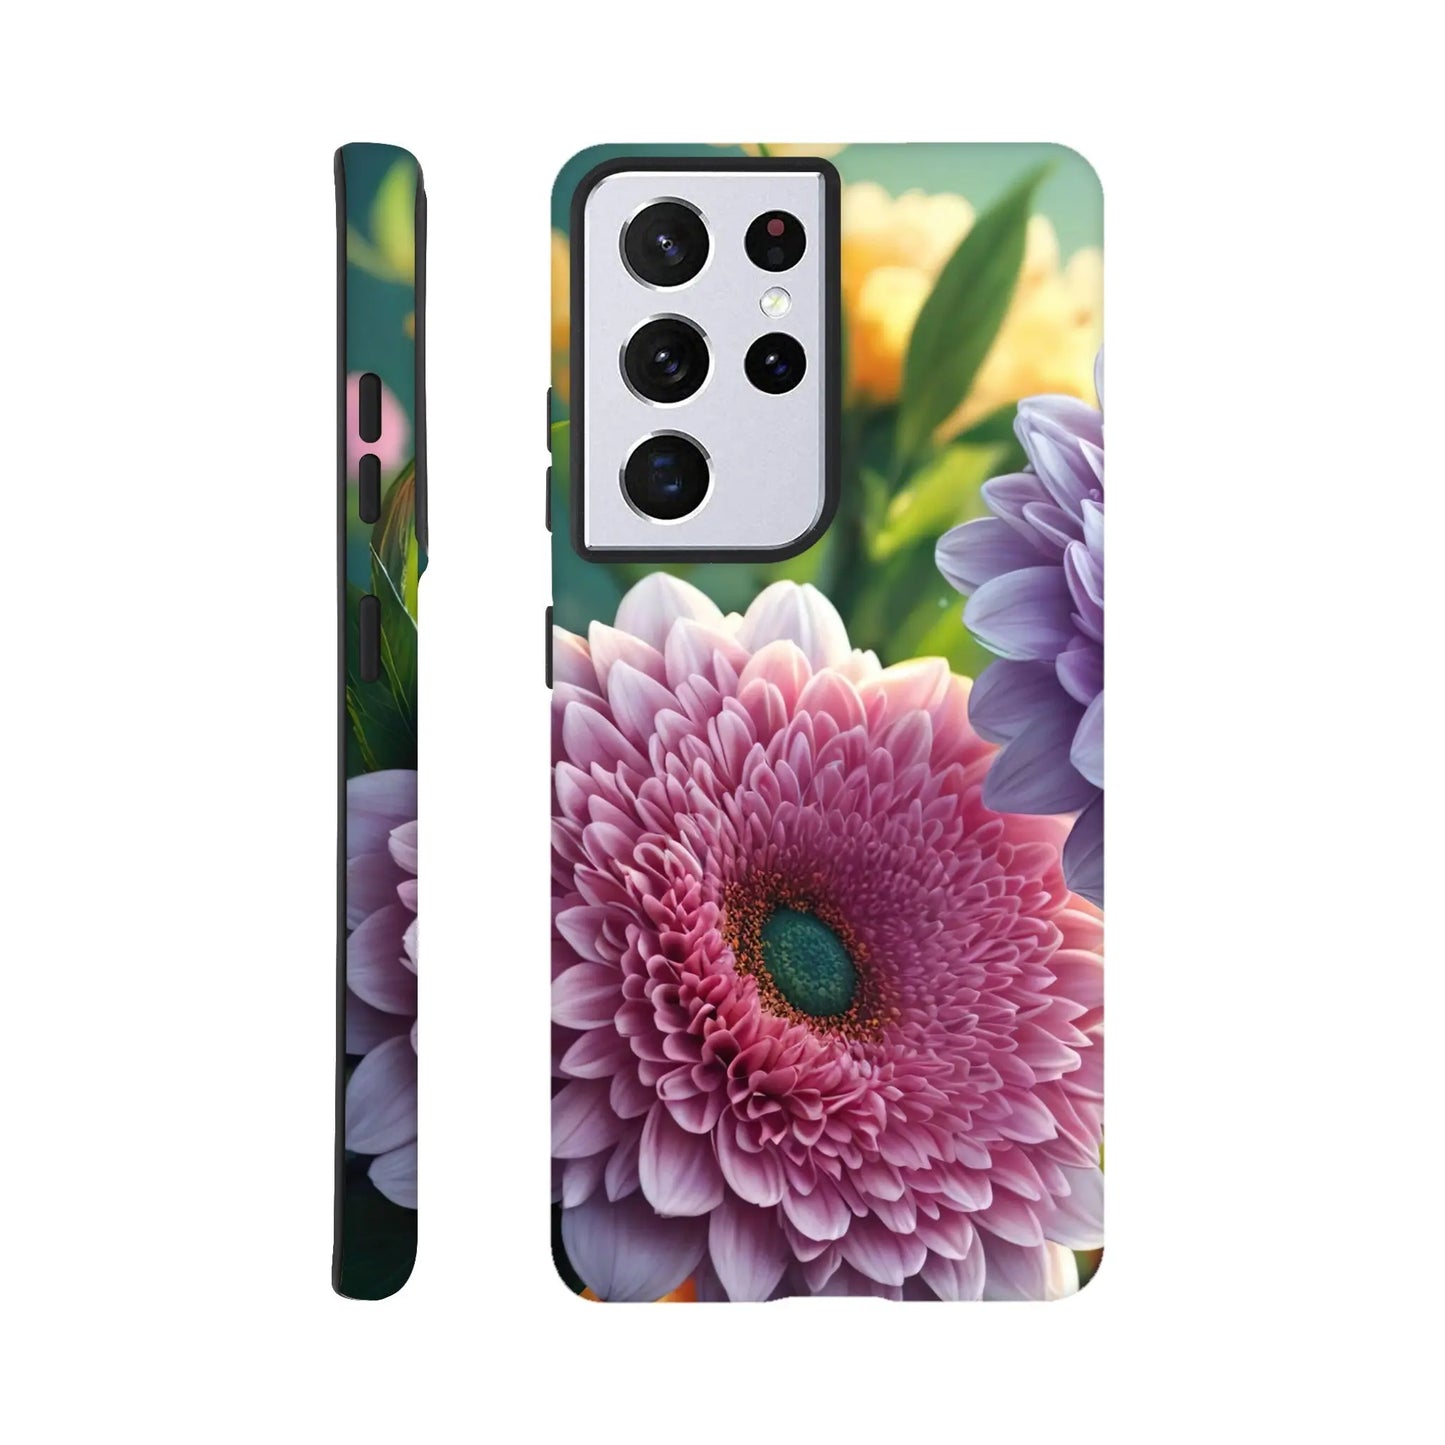 Smartphone-Hülle "Hart" - Blumen Vielfalt - Foto Stil, KI-Kunst, Pflanzen, Galaxy-S21-Ultra - RolConArt